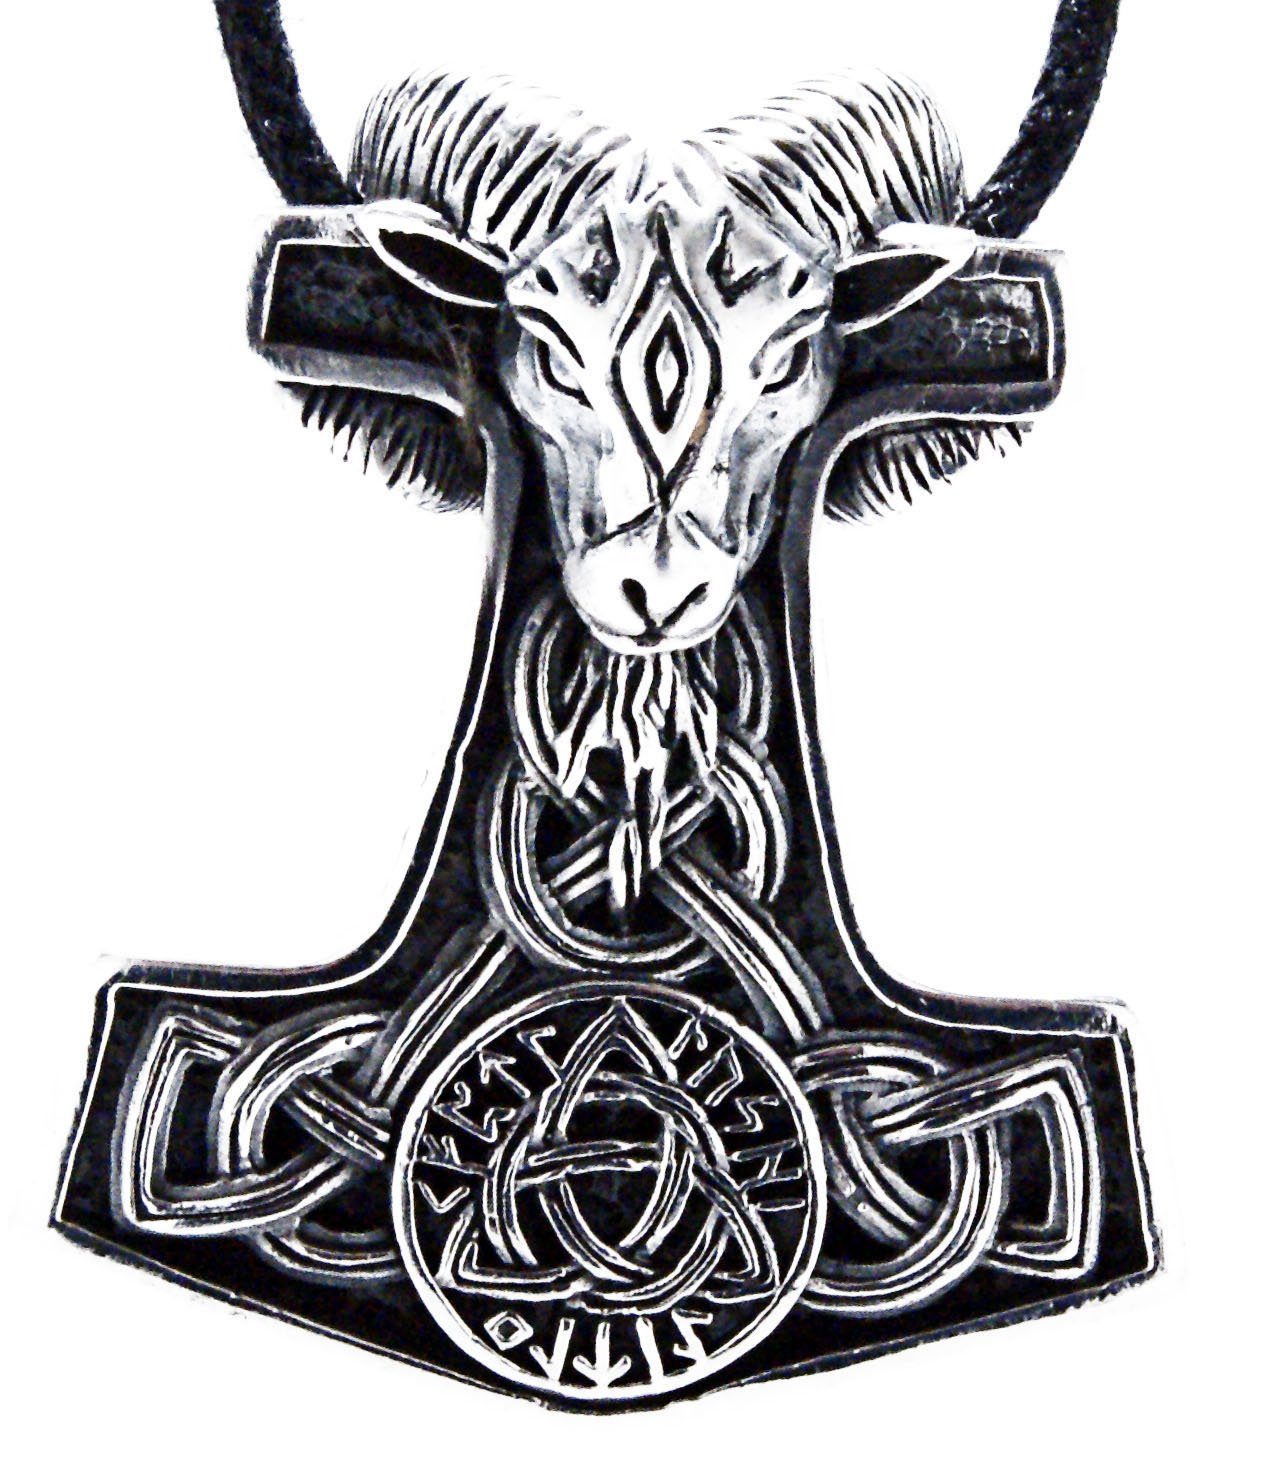 Kiss Thorhammer Knoten Sterling of Leather Runen Silber Kettenanhänger 925 Thorshammer Ziegenkopf